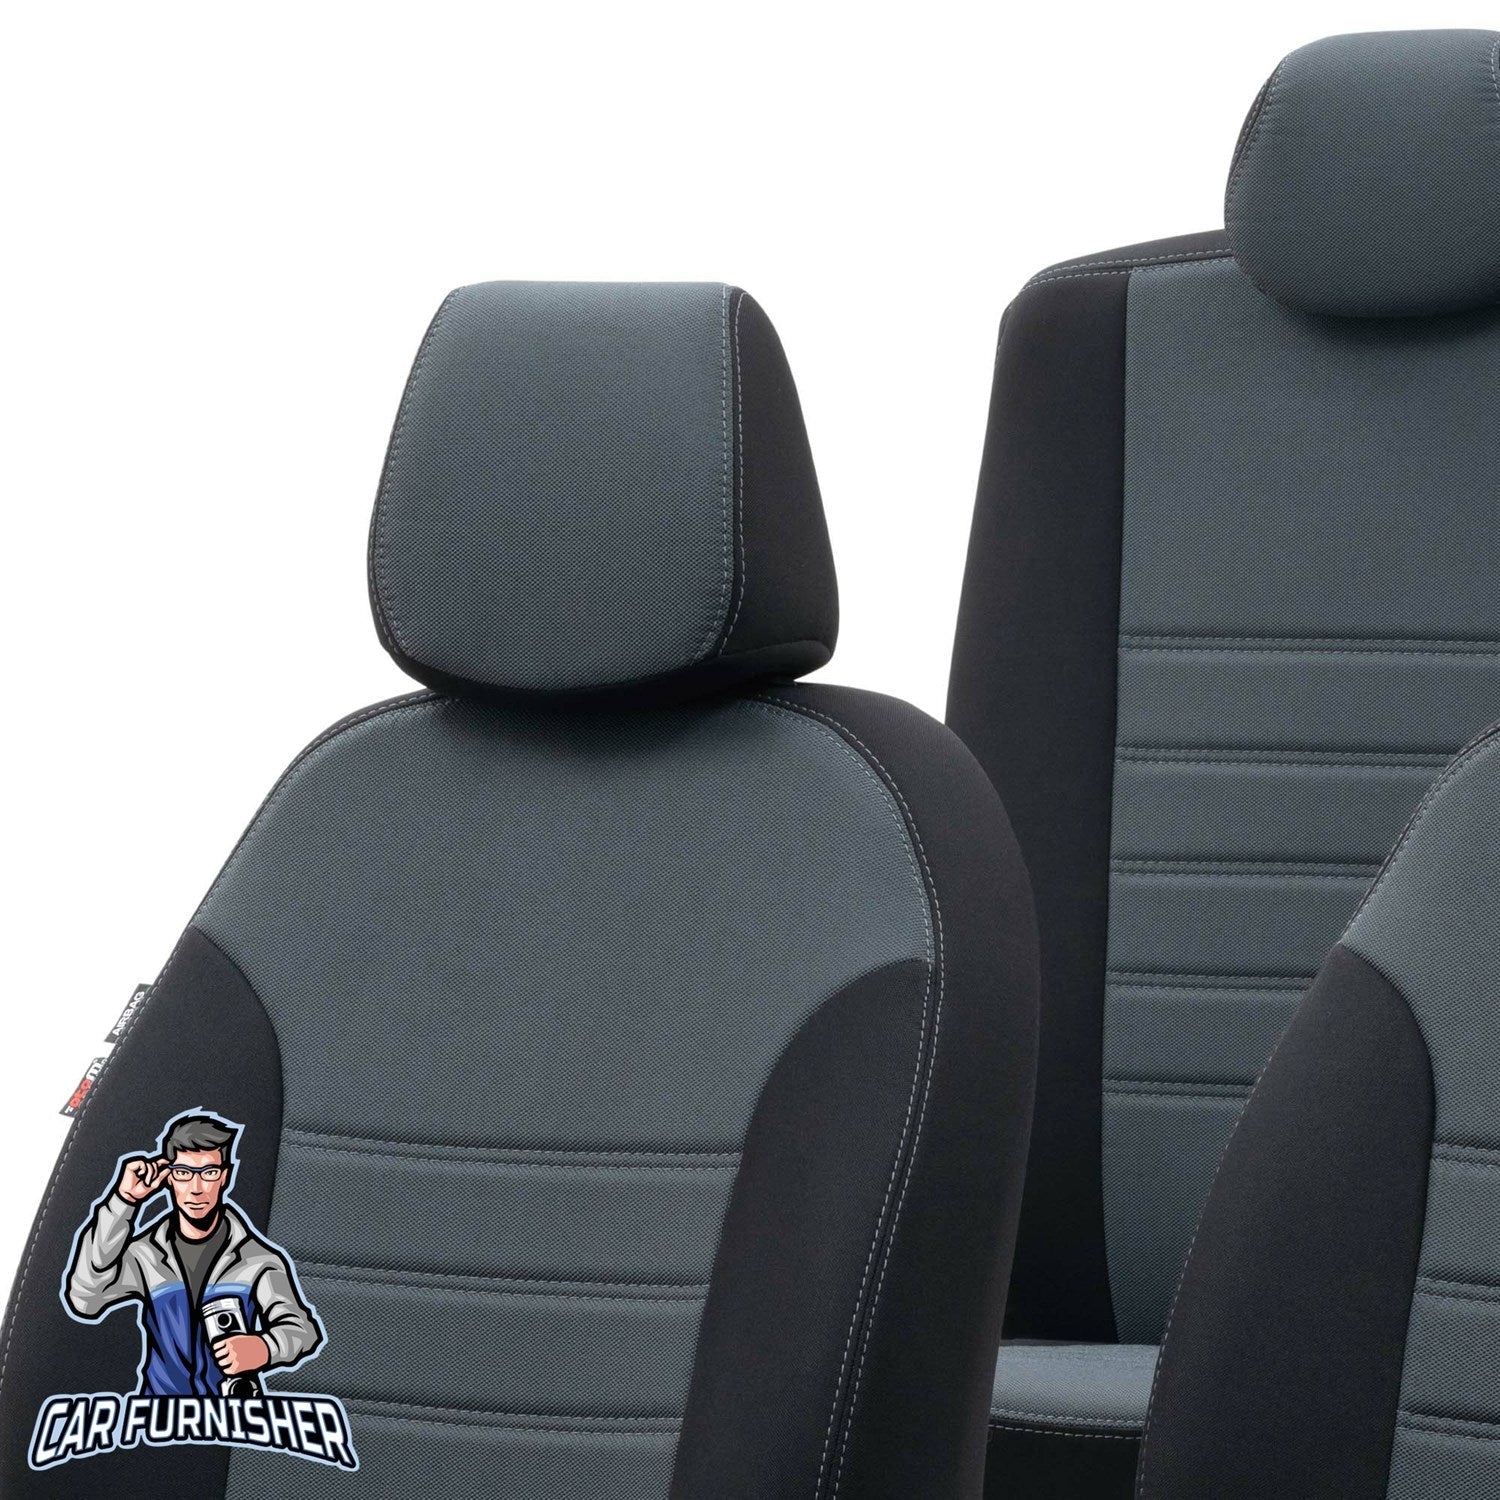 VW CC Comfort Car Seat Cover Coupe 2008-2017 3CC/3C8 Original Smoked Black Full Set (5 Seats + Handrest) Fabric